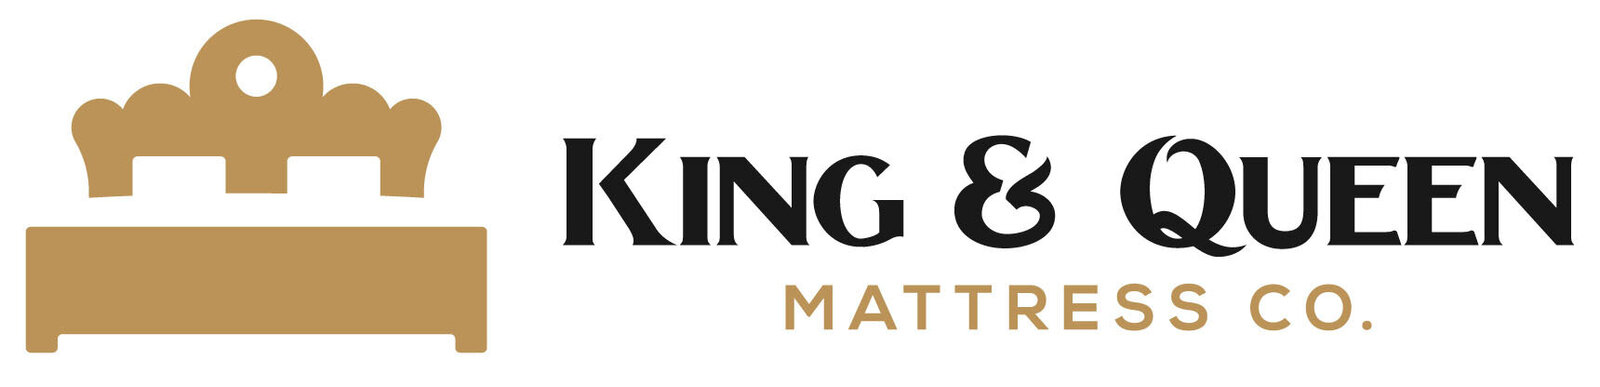 kingqueenmattressco_logo